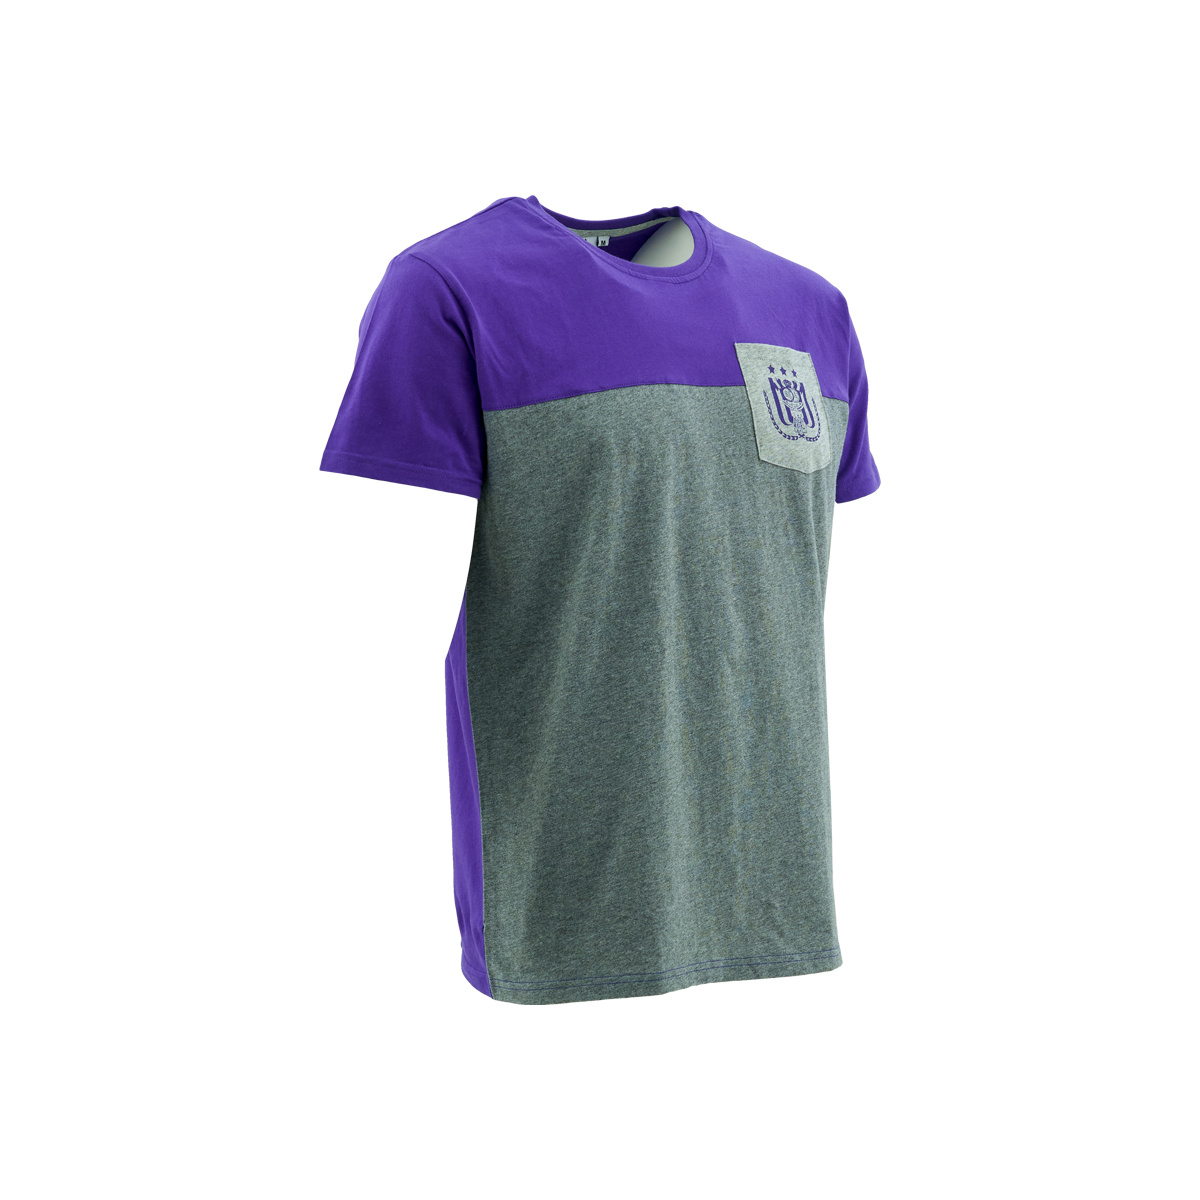 Topfanz RSCA T-shirt grijs